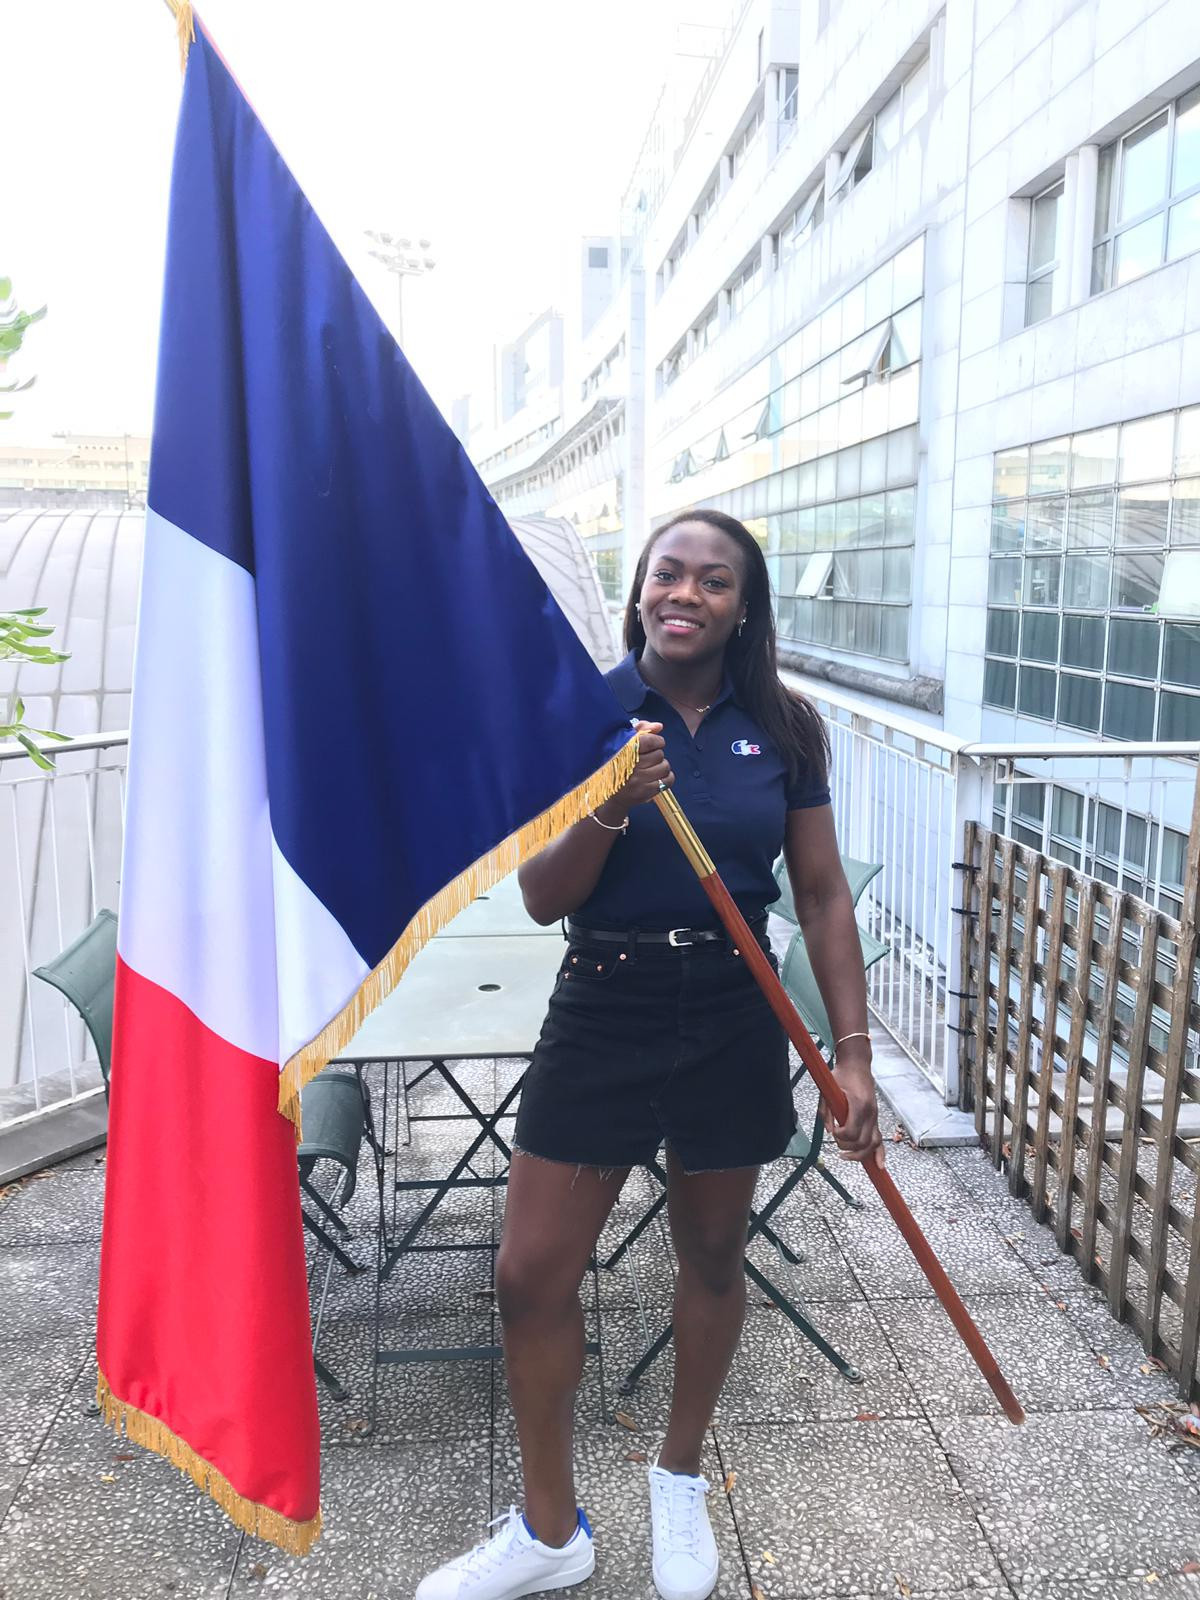 Triple world champion judoka Agbegnenou named French flag bearer at 2019 European Games